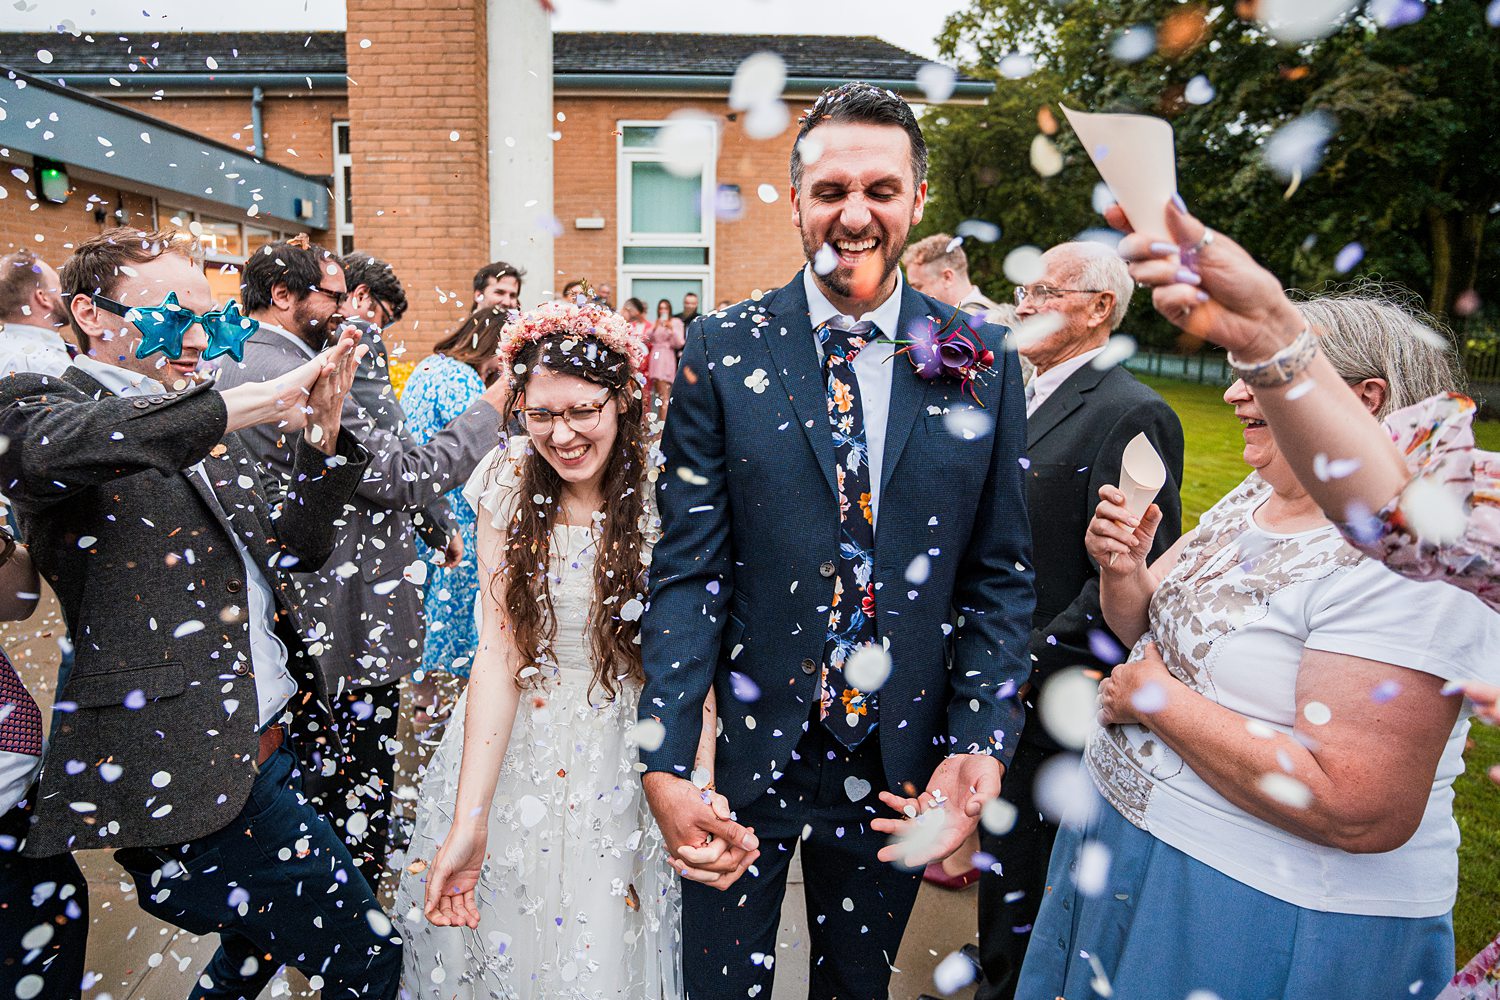 Joyful wedding confetti toss celebration outdoors.